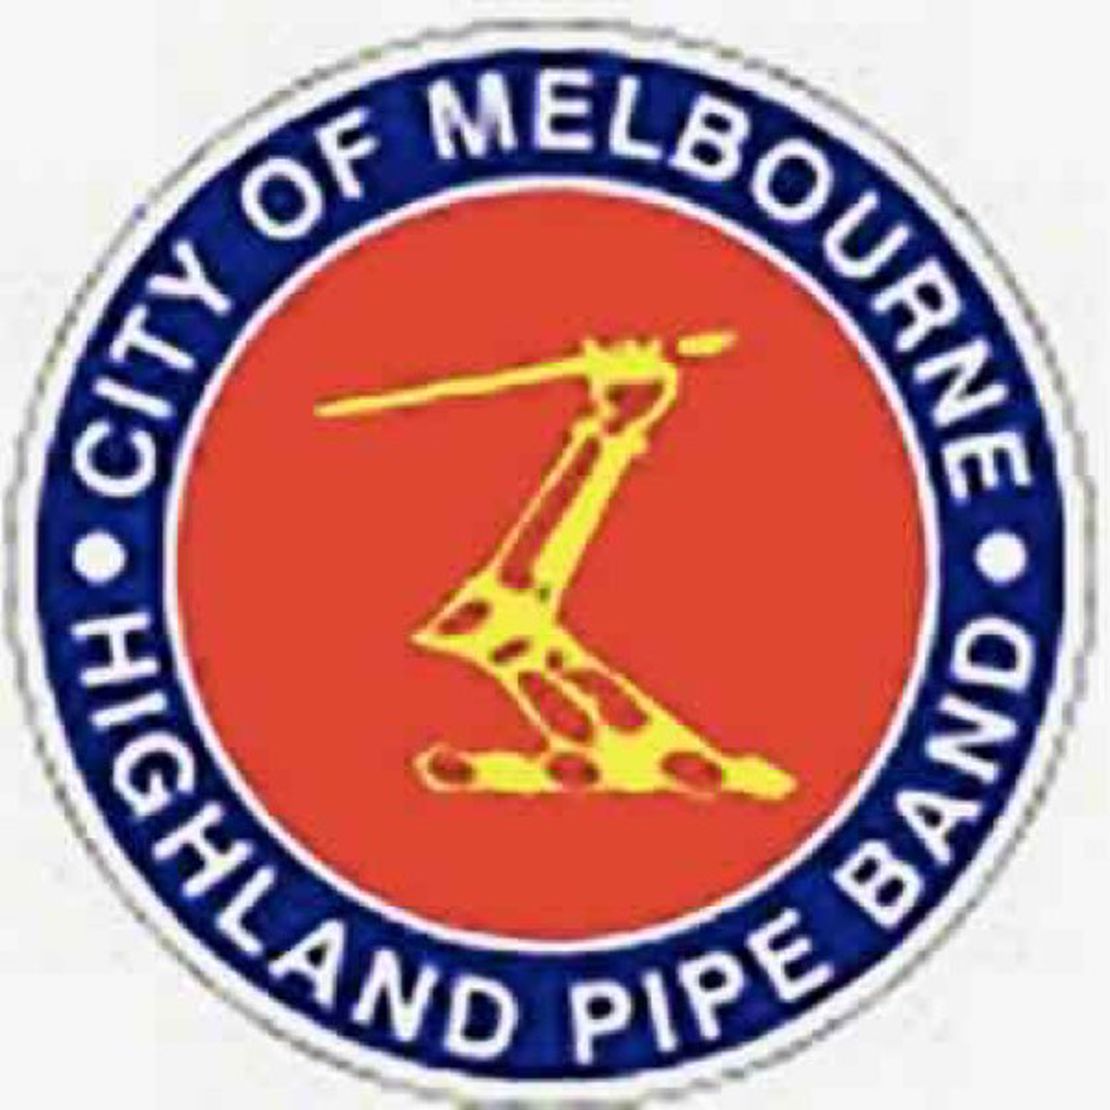 city of melbourne highland pipeband